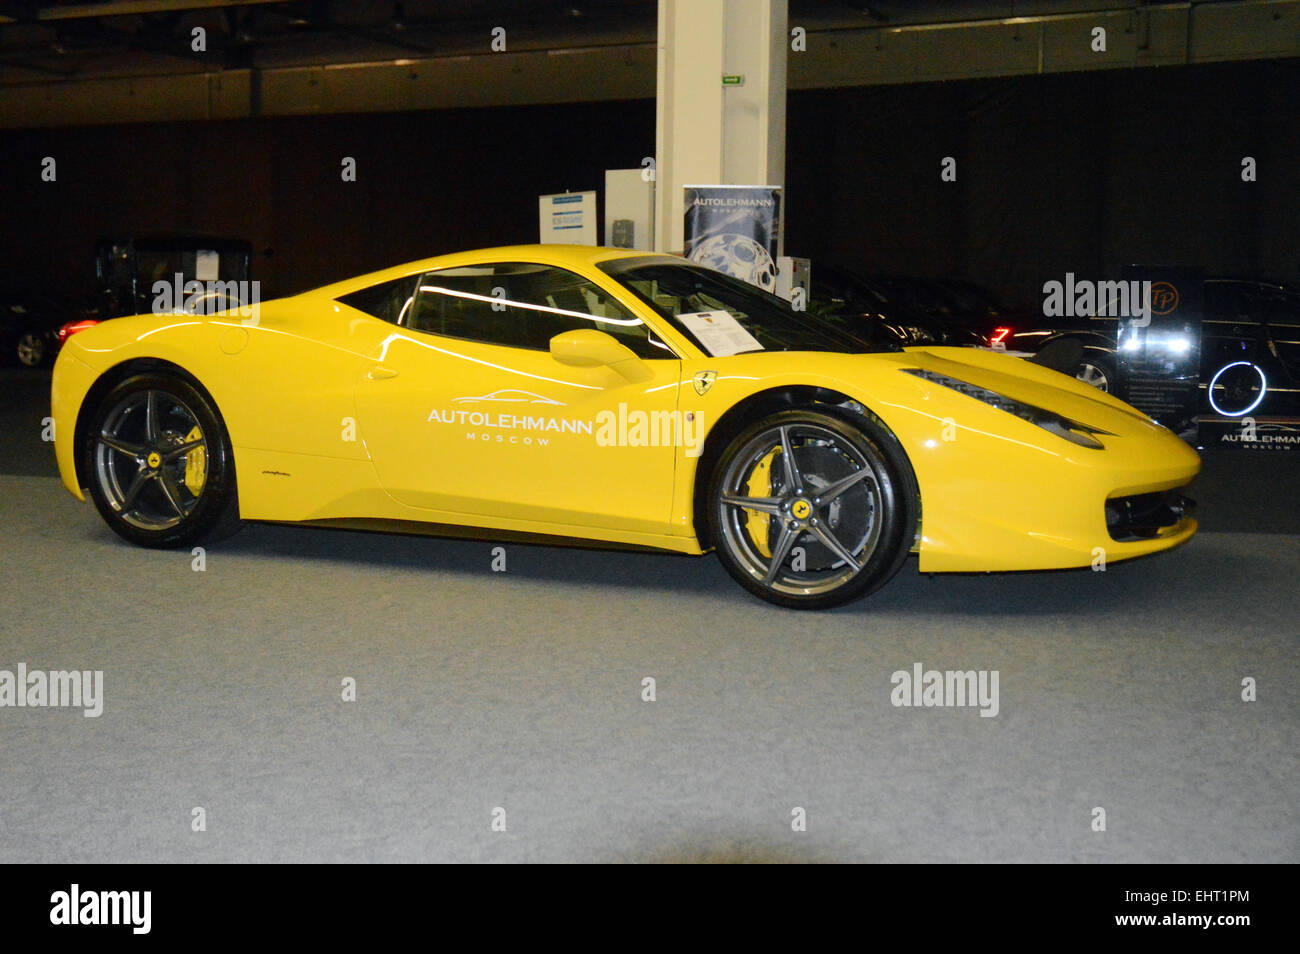 Ferrari yellow color in the showroom Stock Photo